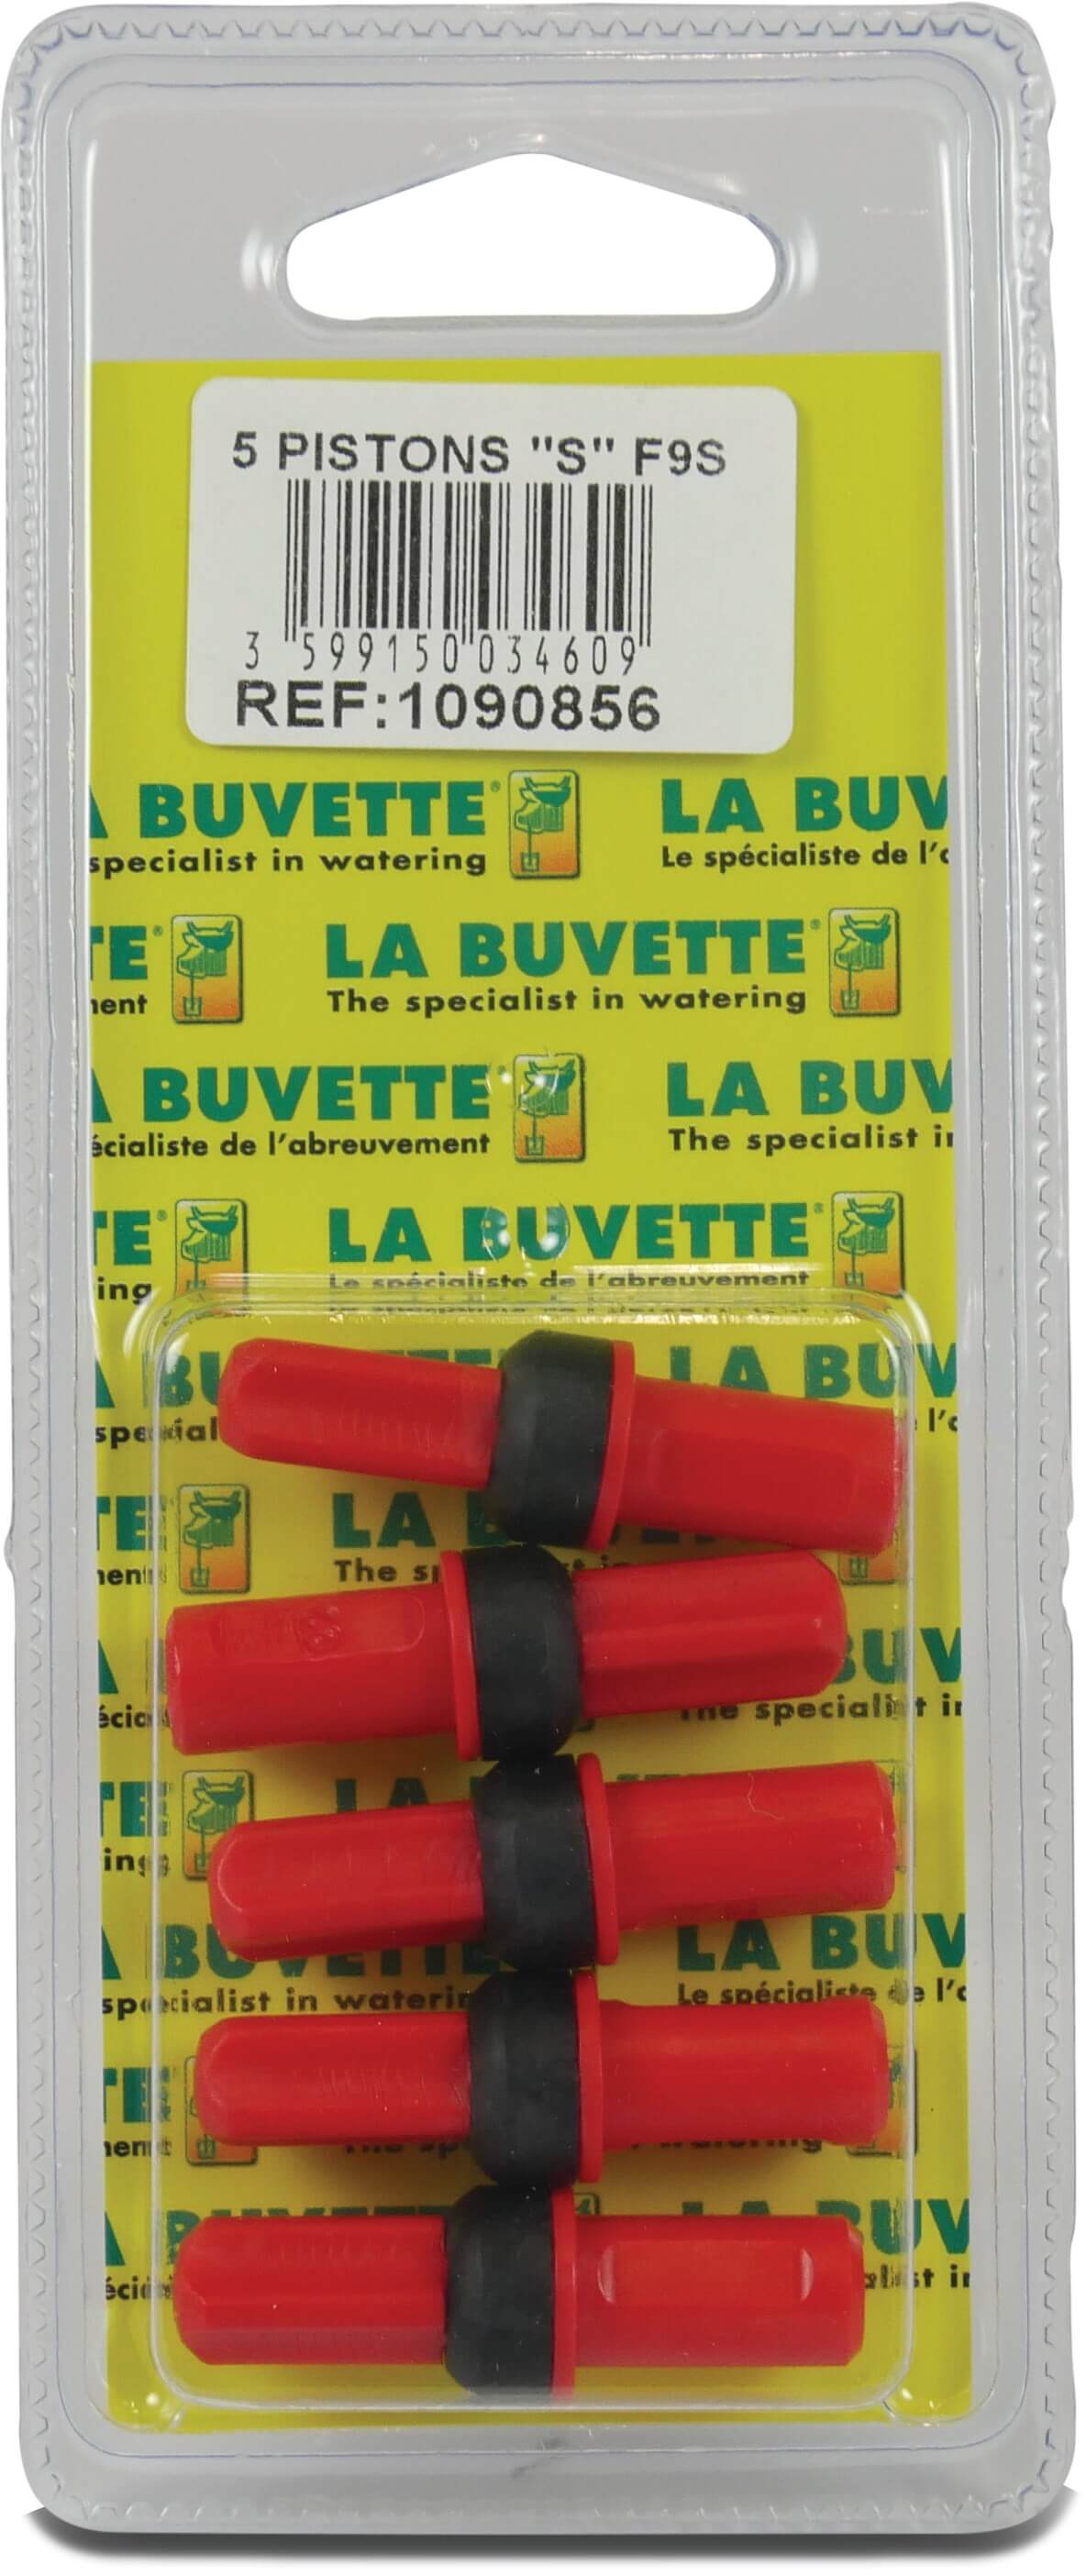 La Buvette Valve "S" F 9 S (x5) blister pack